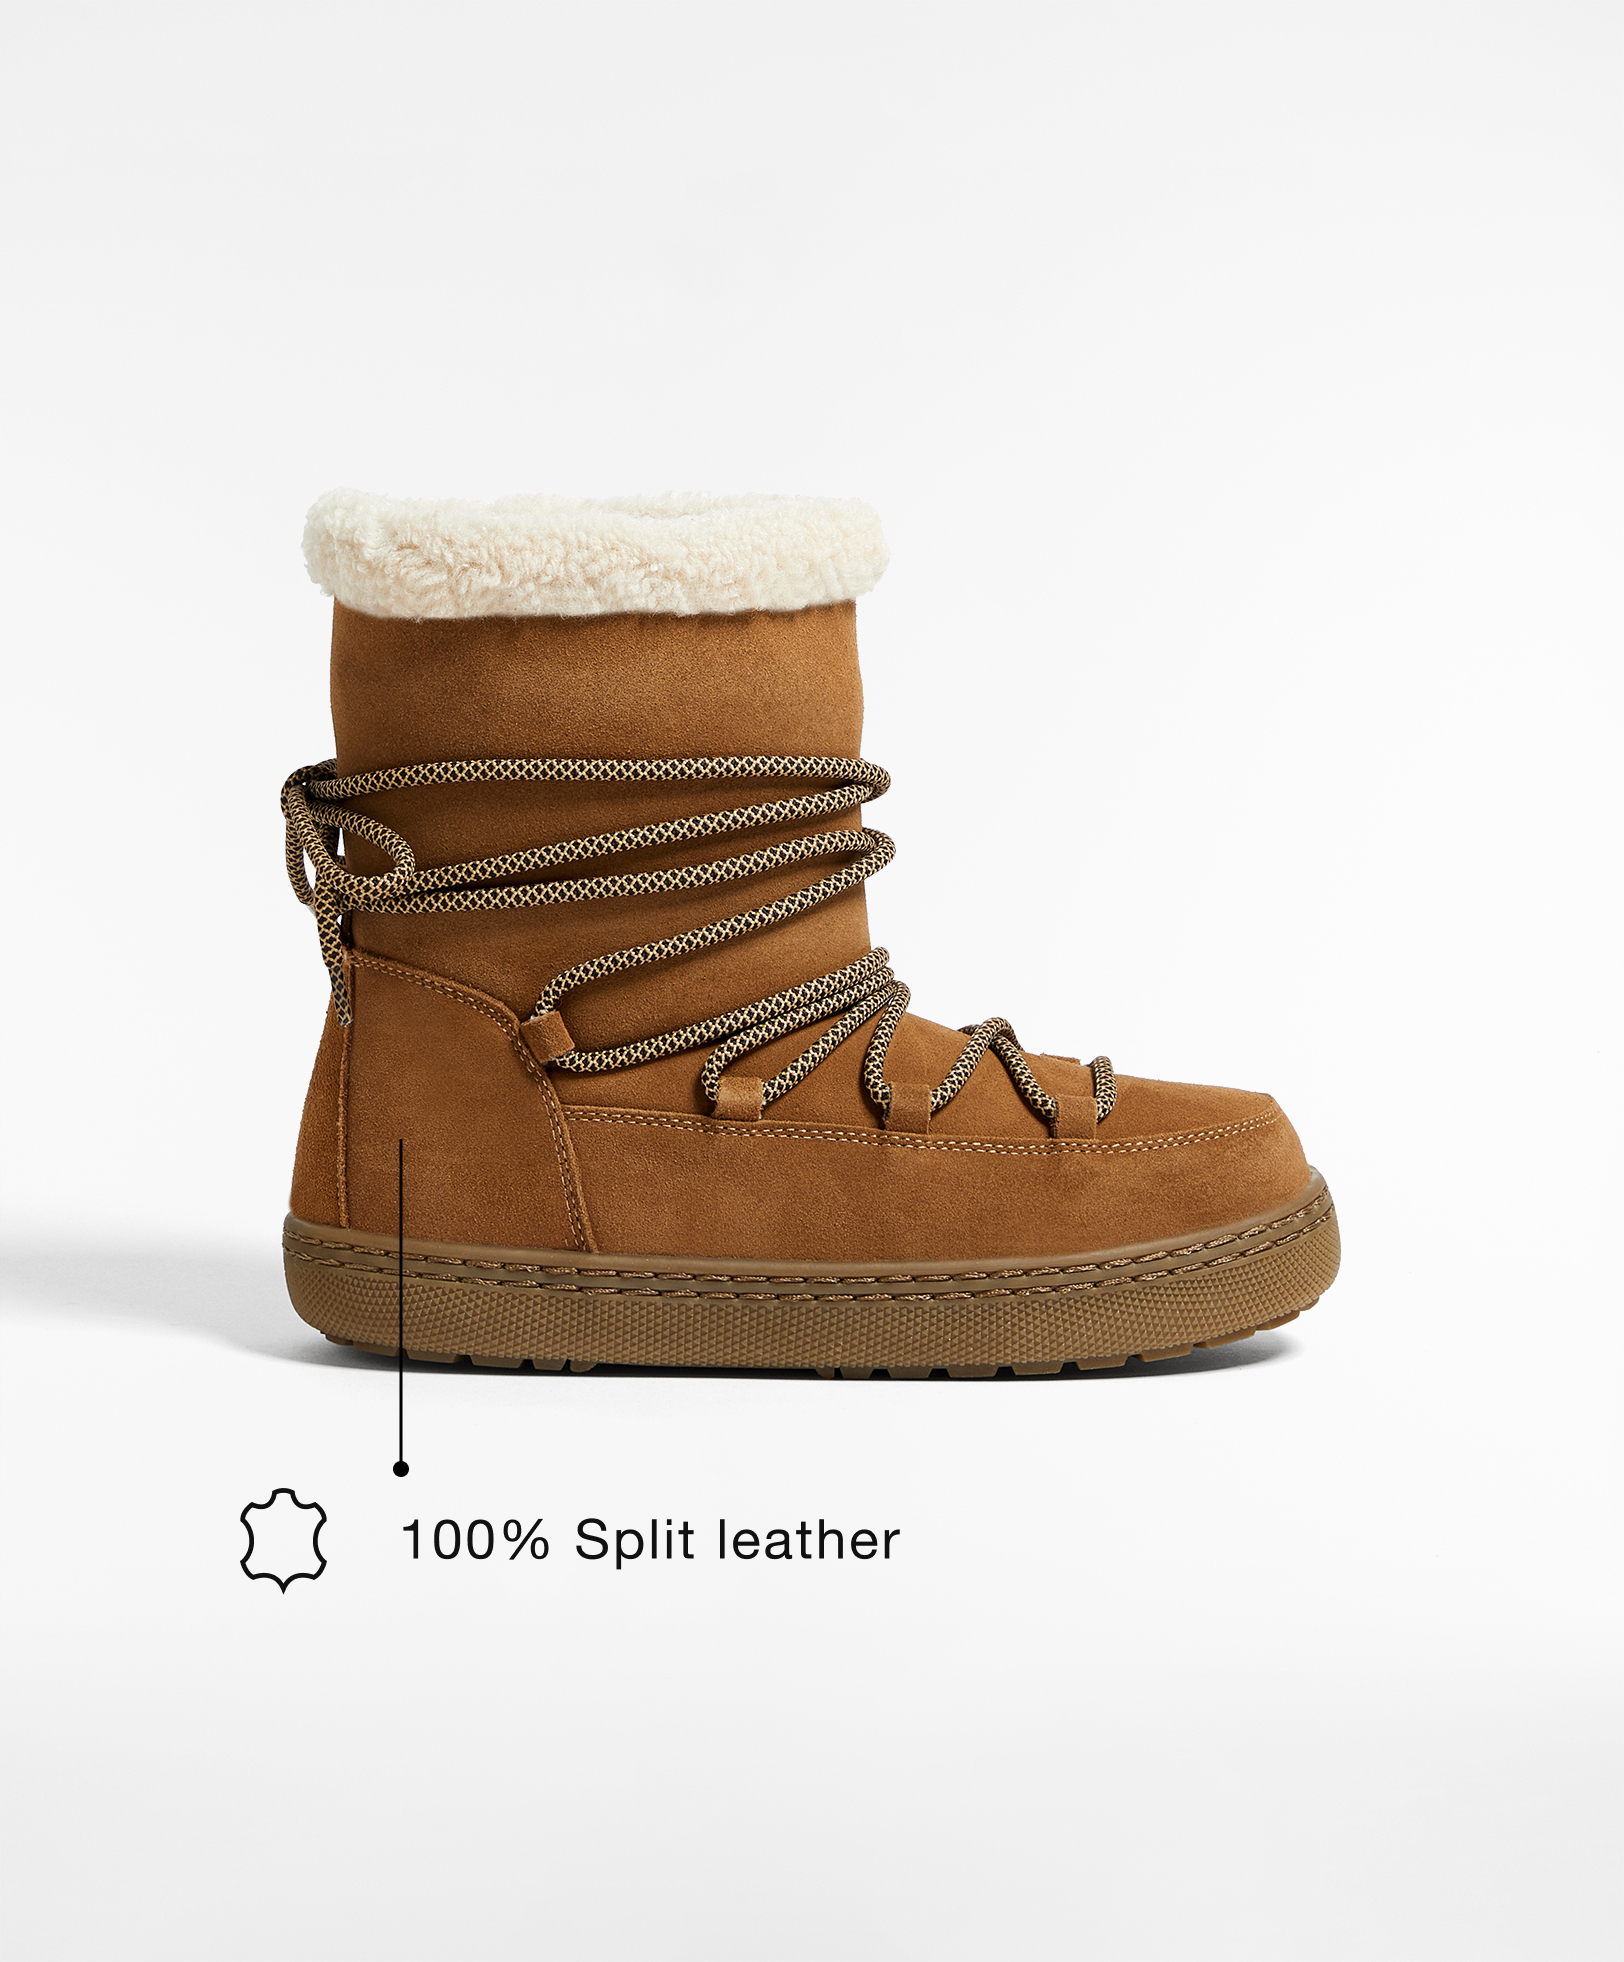 Après-ski boots with 100% split leather upper